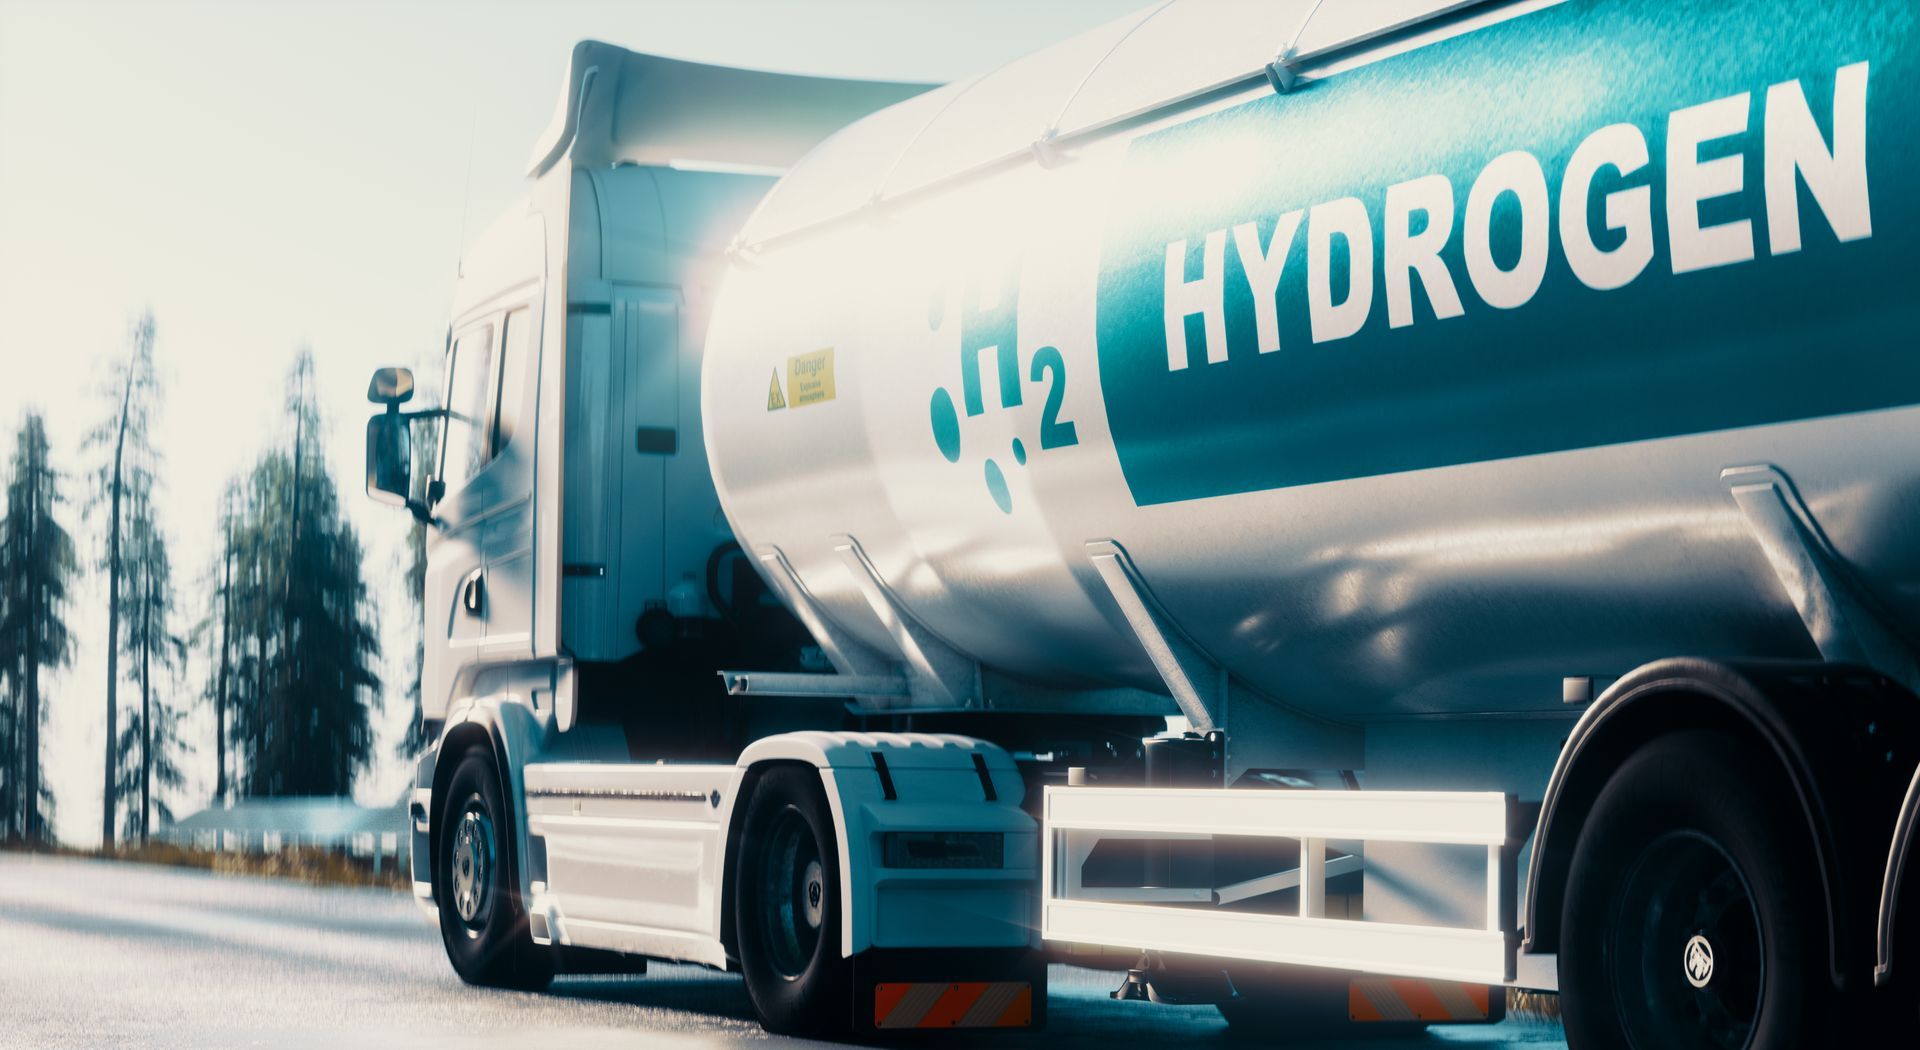 Truck transporting hydrogen